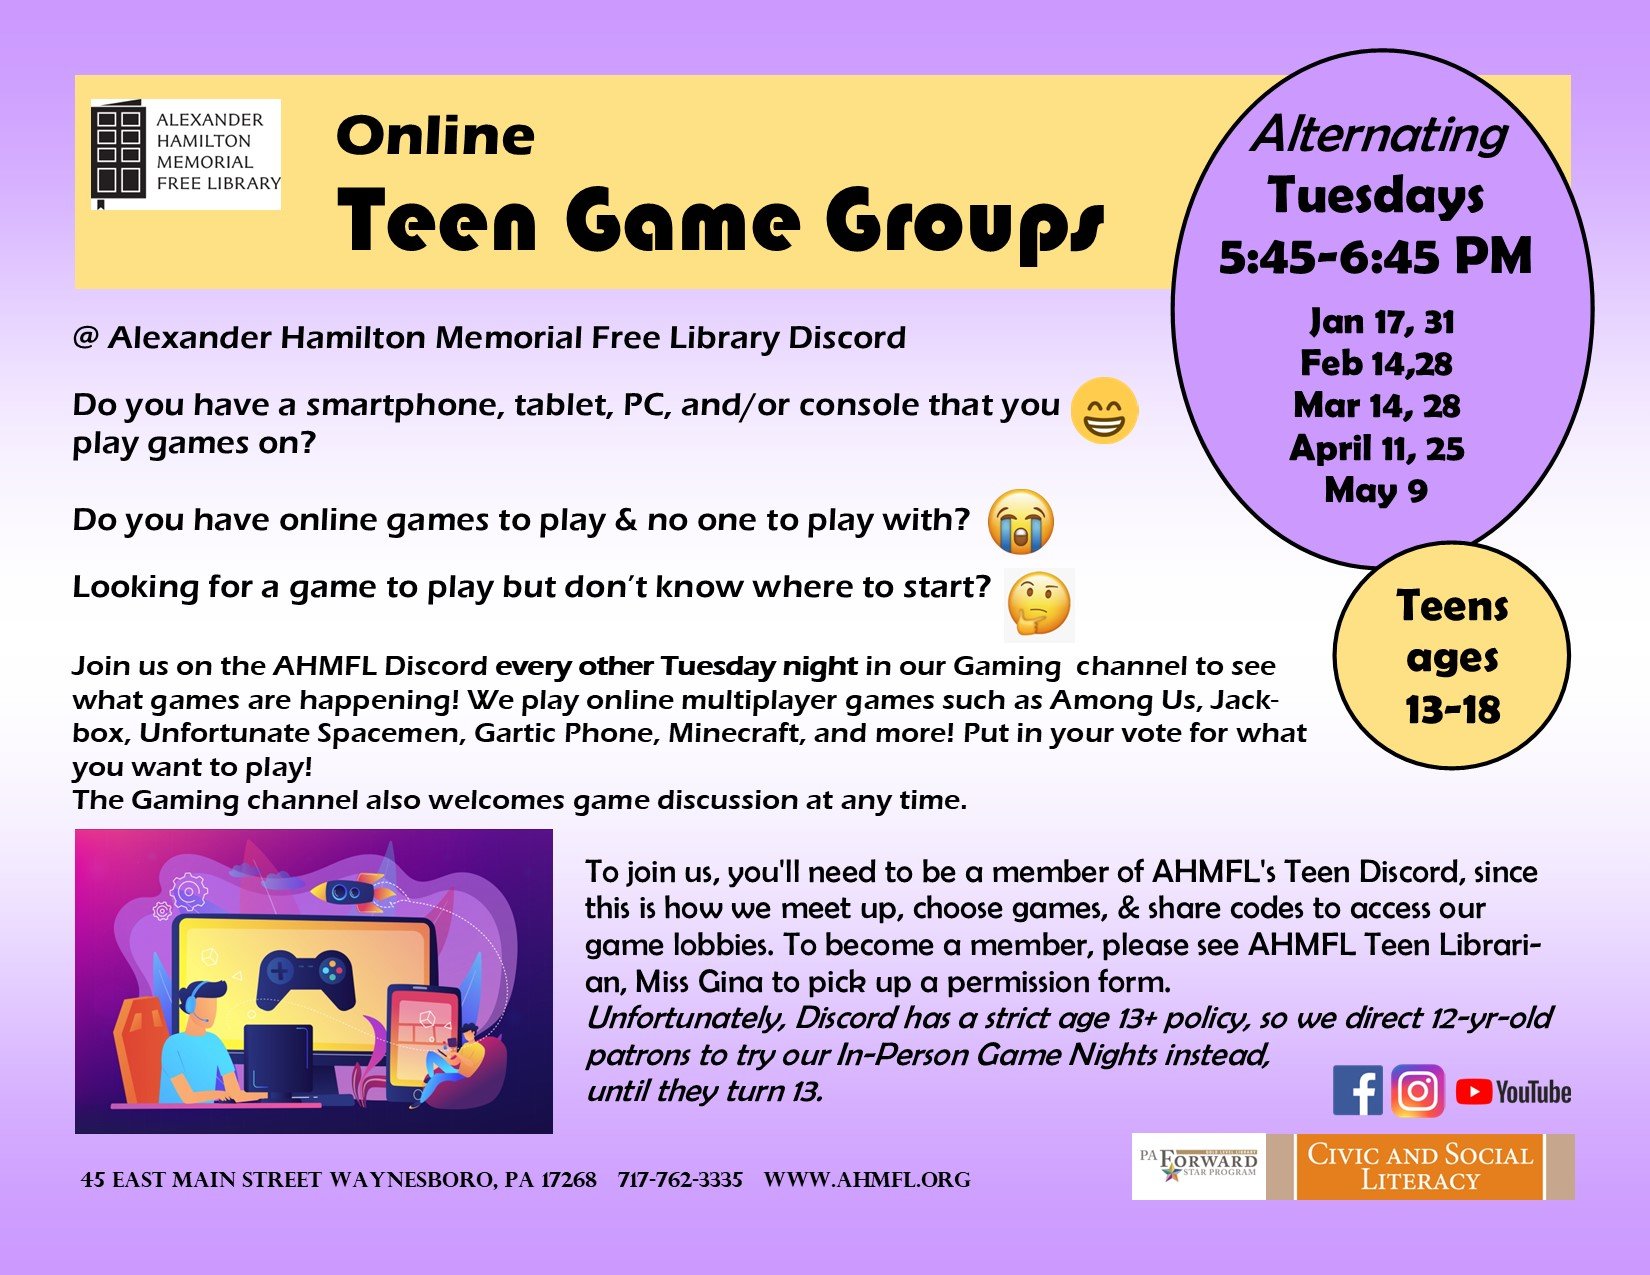 Teen Game Night - Online — Alexander Hamilton Memorial Free Library